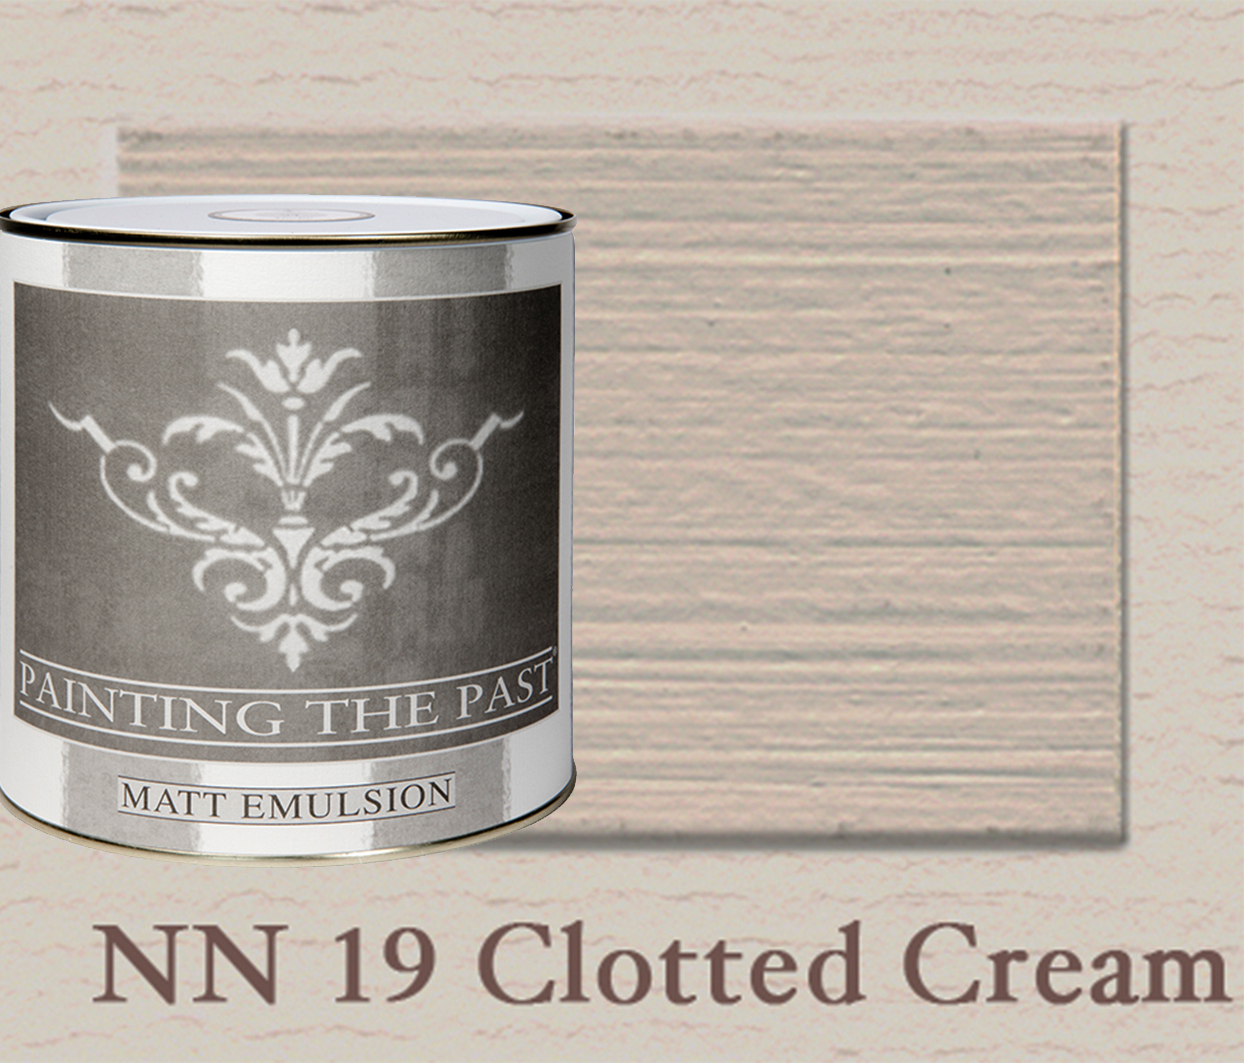 Painting The Past Matt Emulsion Clotted Cream